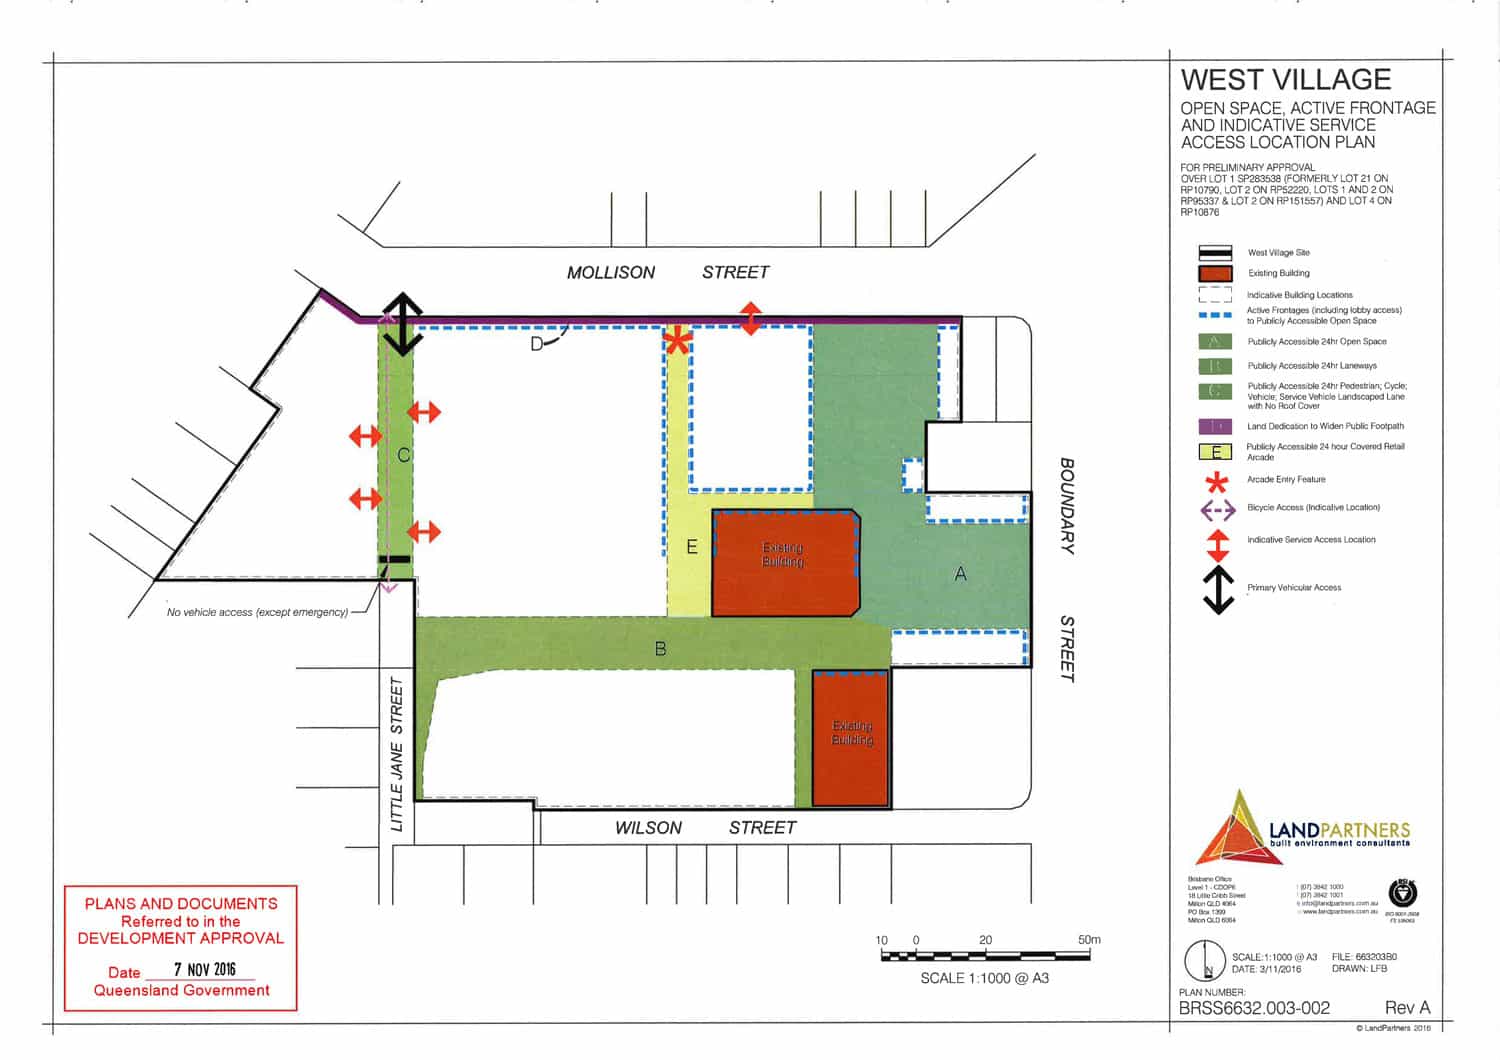 Zone Plan of West Village, West End